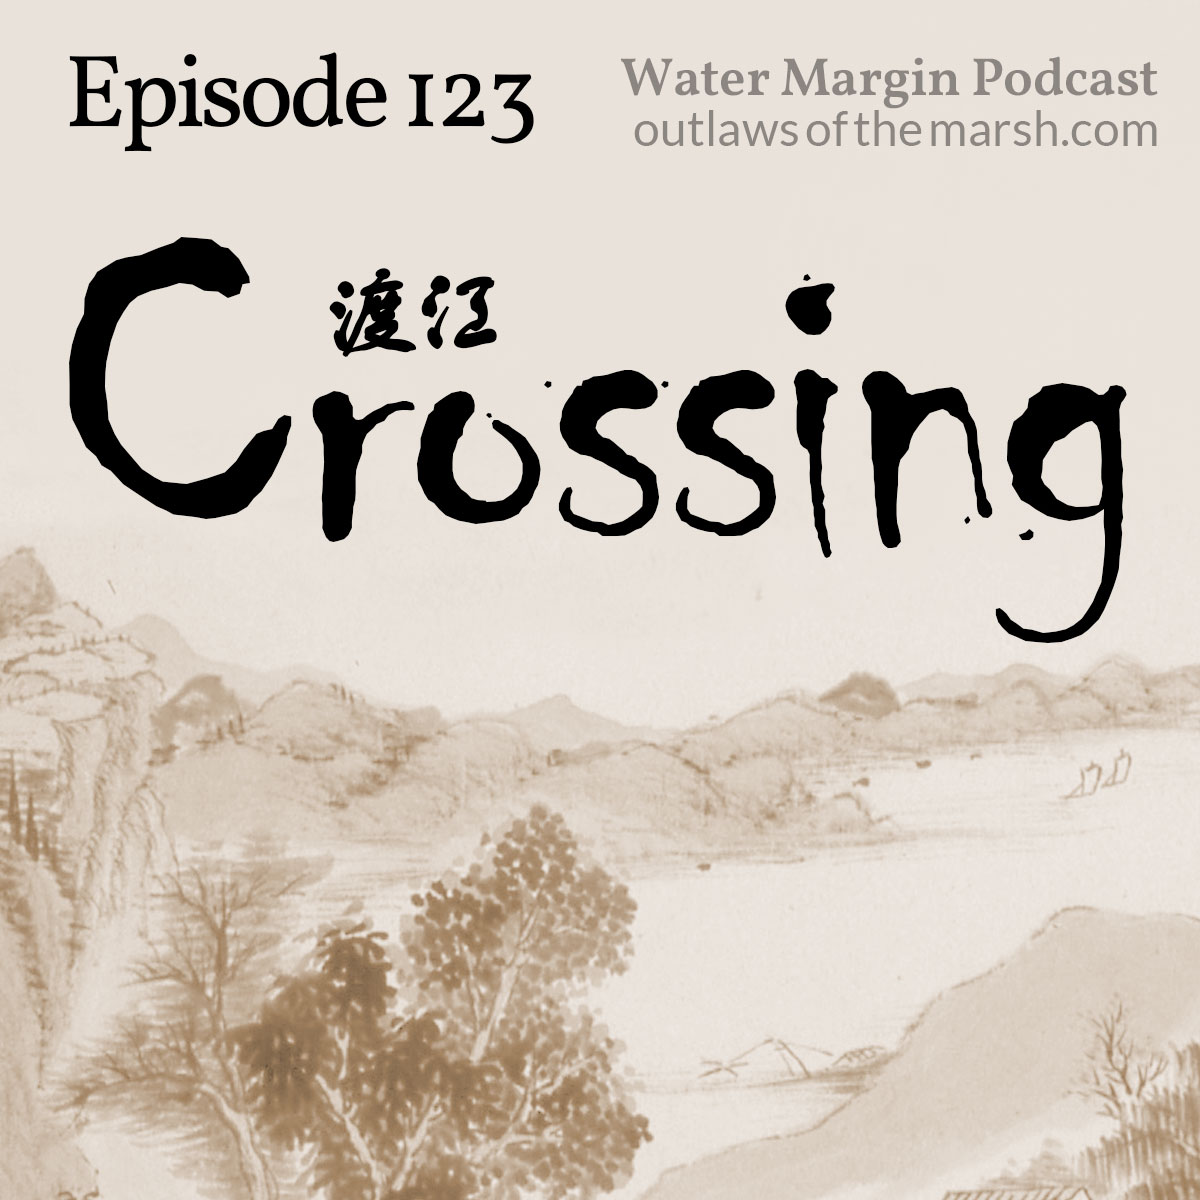 Water Margin Podcast: Episode 123